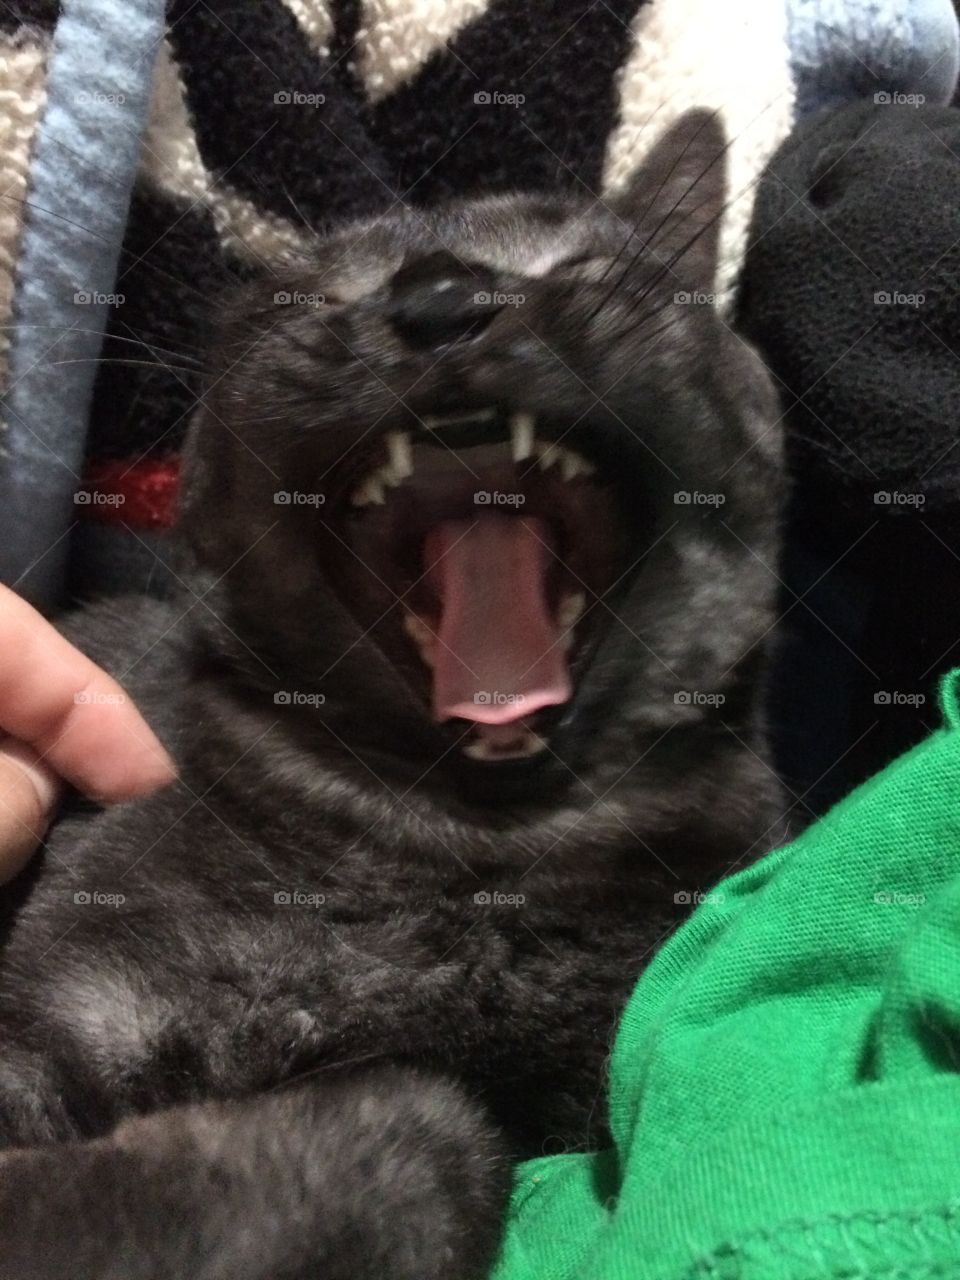 Big yawn 